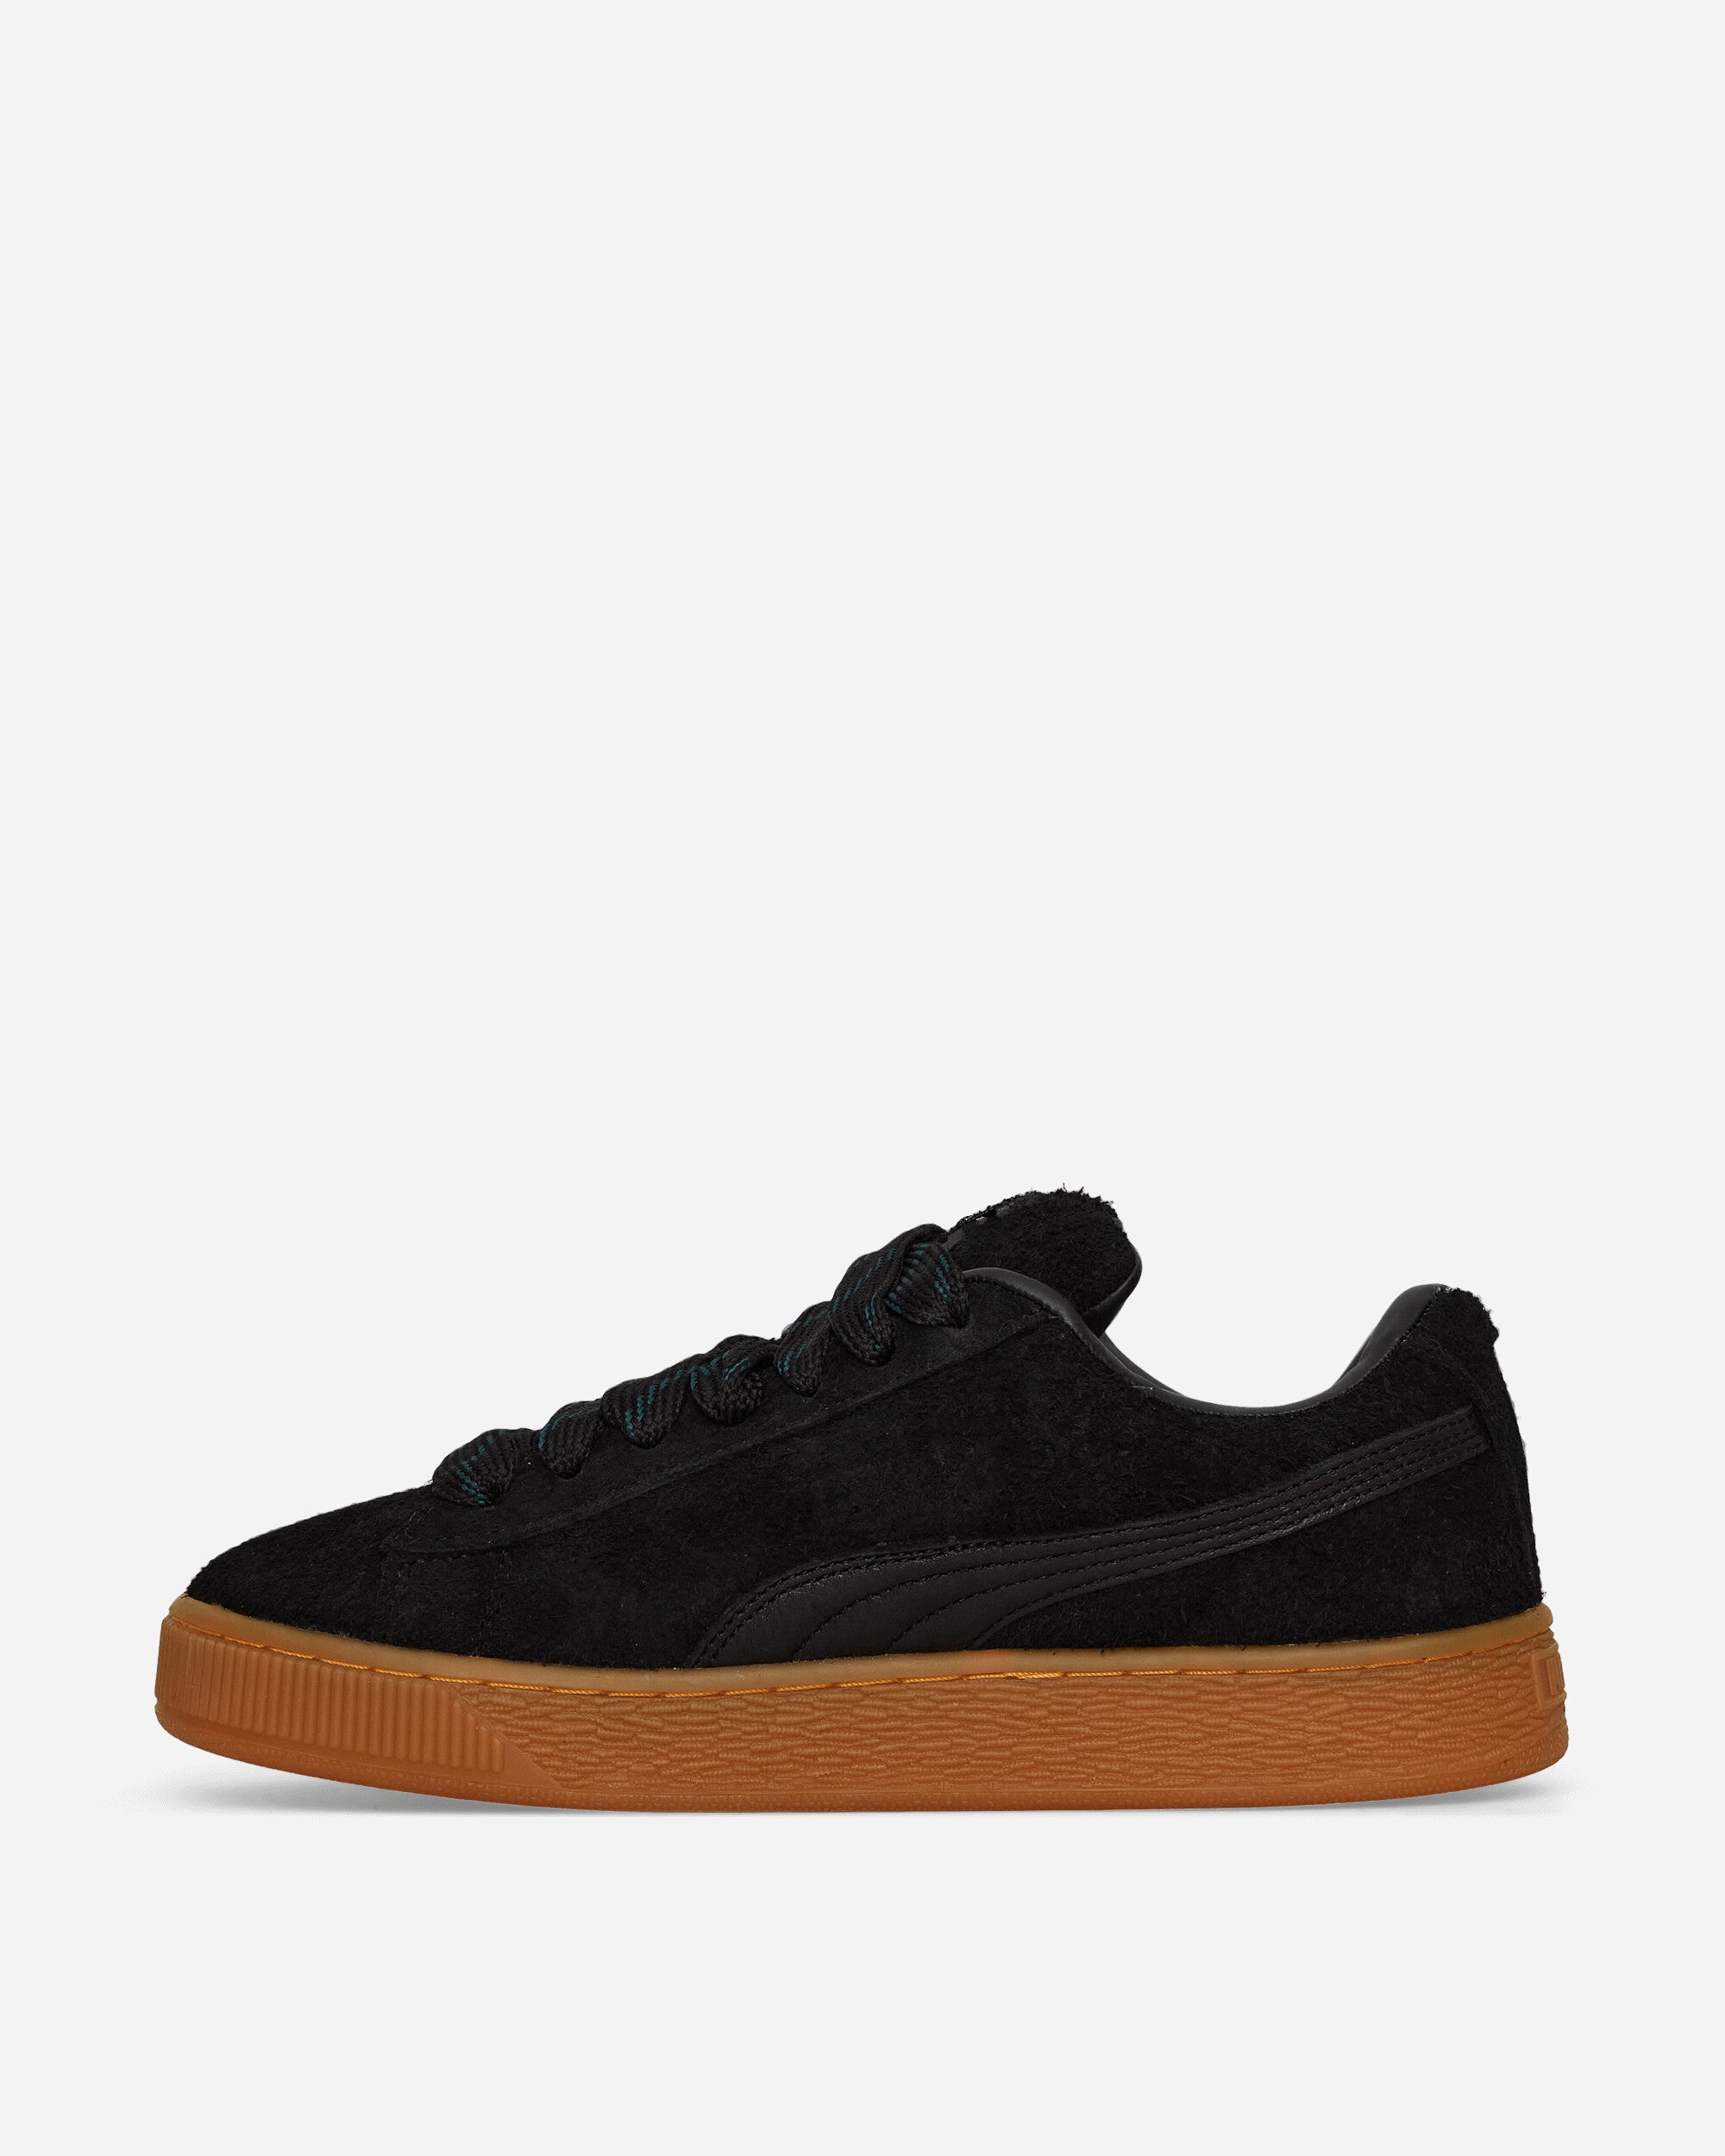 Puma Suede Xl Flecked Black Sneakers Low 398094-01